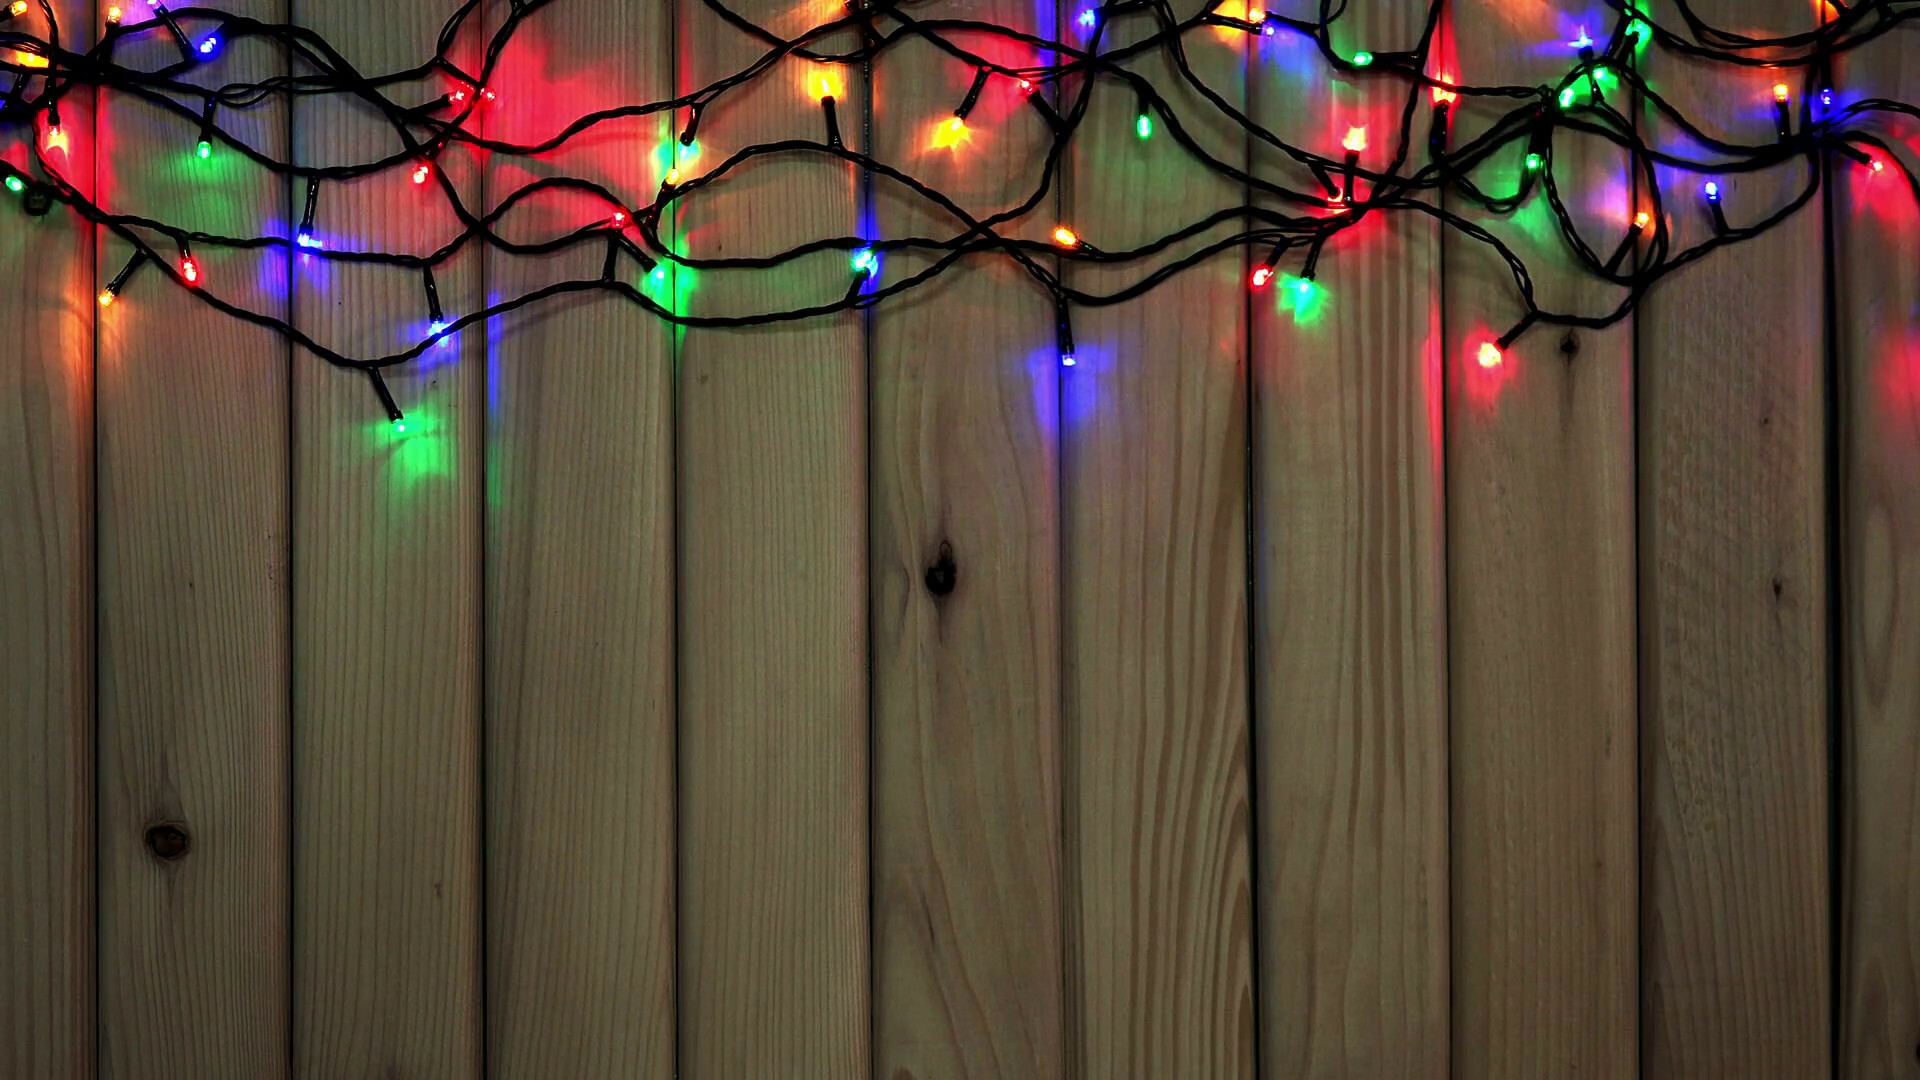 Fairy Lights: Christmas, A warm, twinkling glow, Illumination. 1920x1080 Full HD Wallpaper.